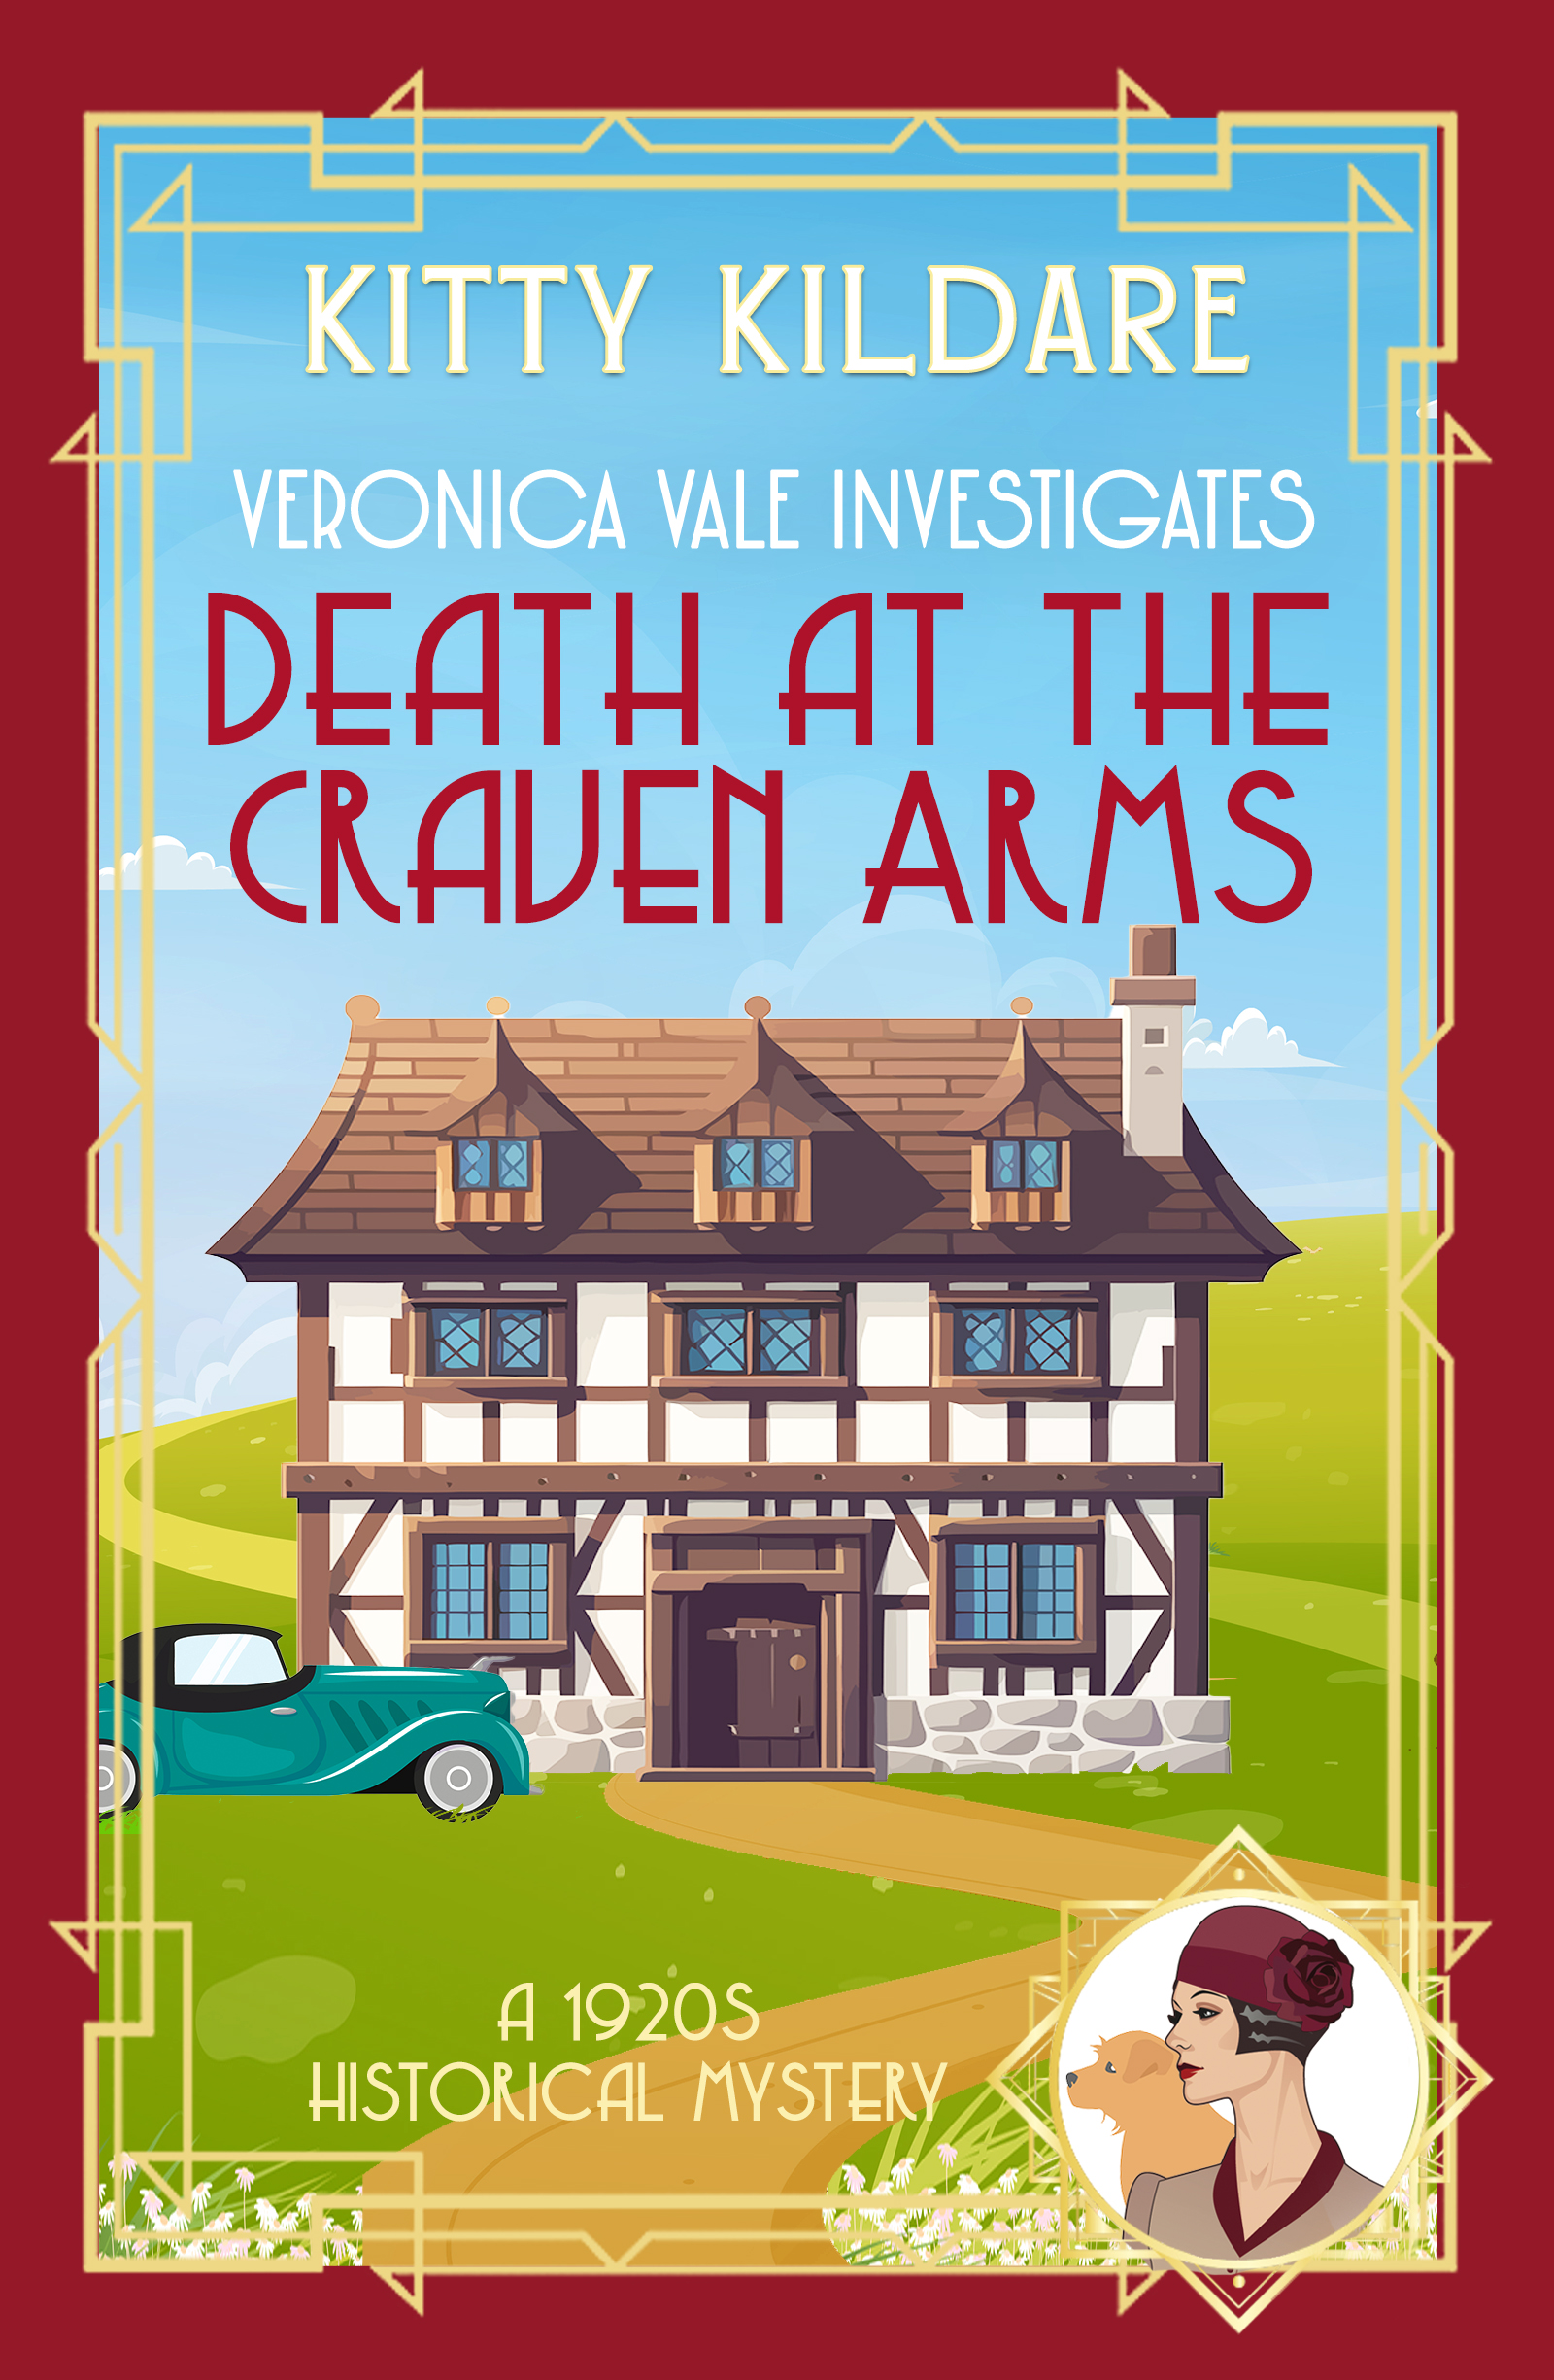 1920s British historical cozy mystery series Veronica Vale Investigates